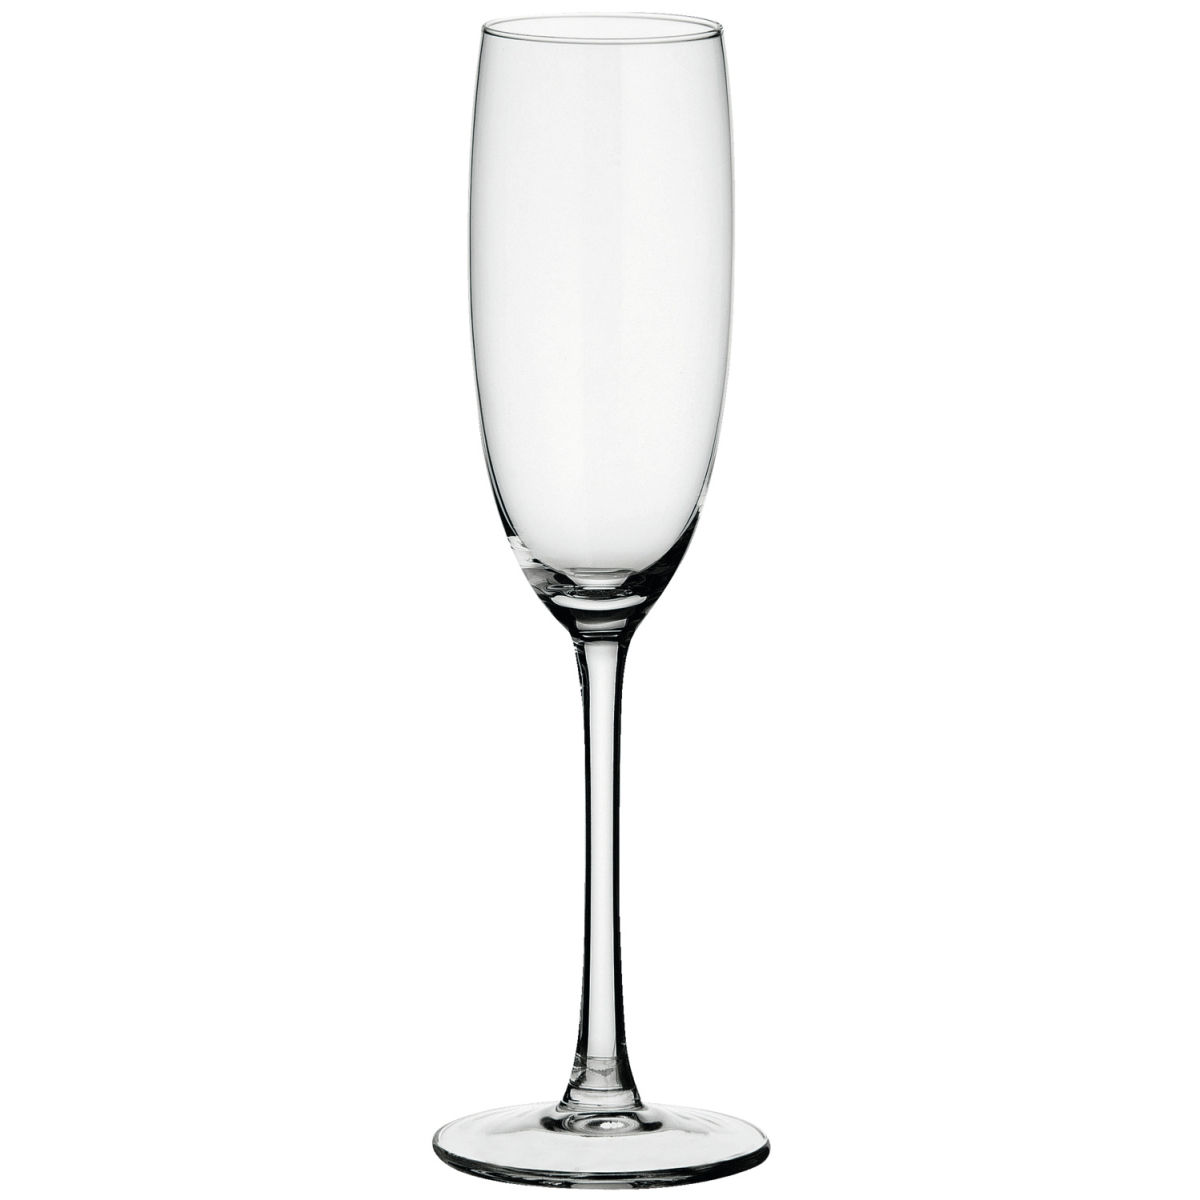 Royal leerdam Champagneglas Plaza zonder vulstreepje; 200ml, 6x23 cm (ØxH); transparant; 6 stuk / verpakking